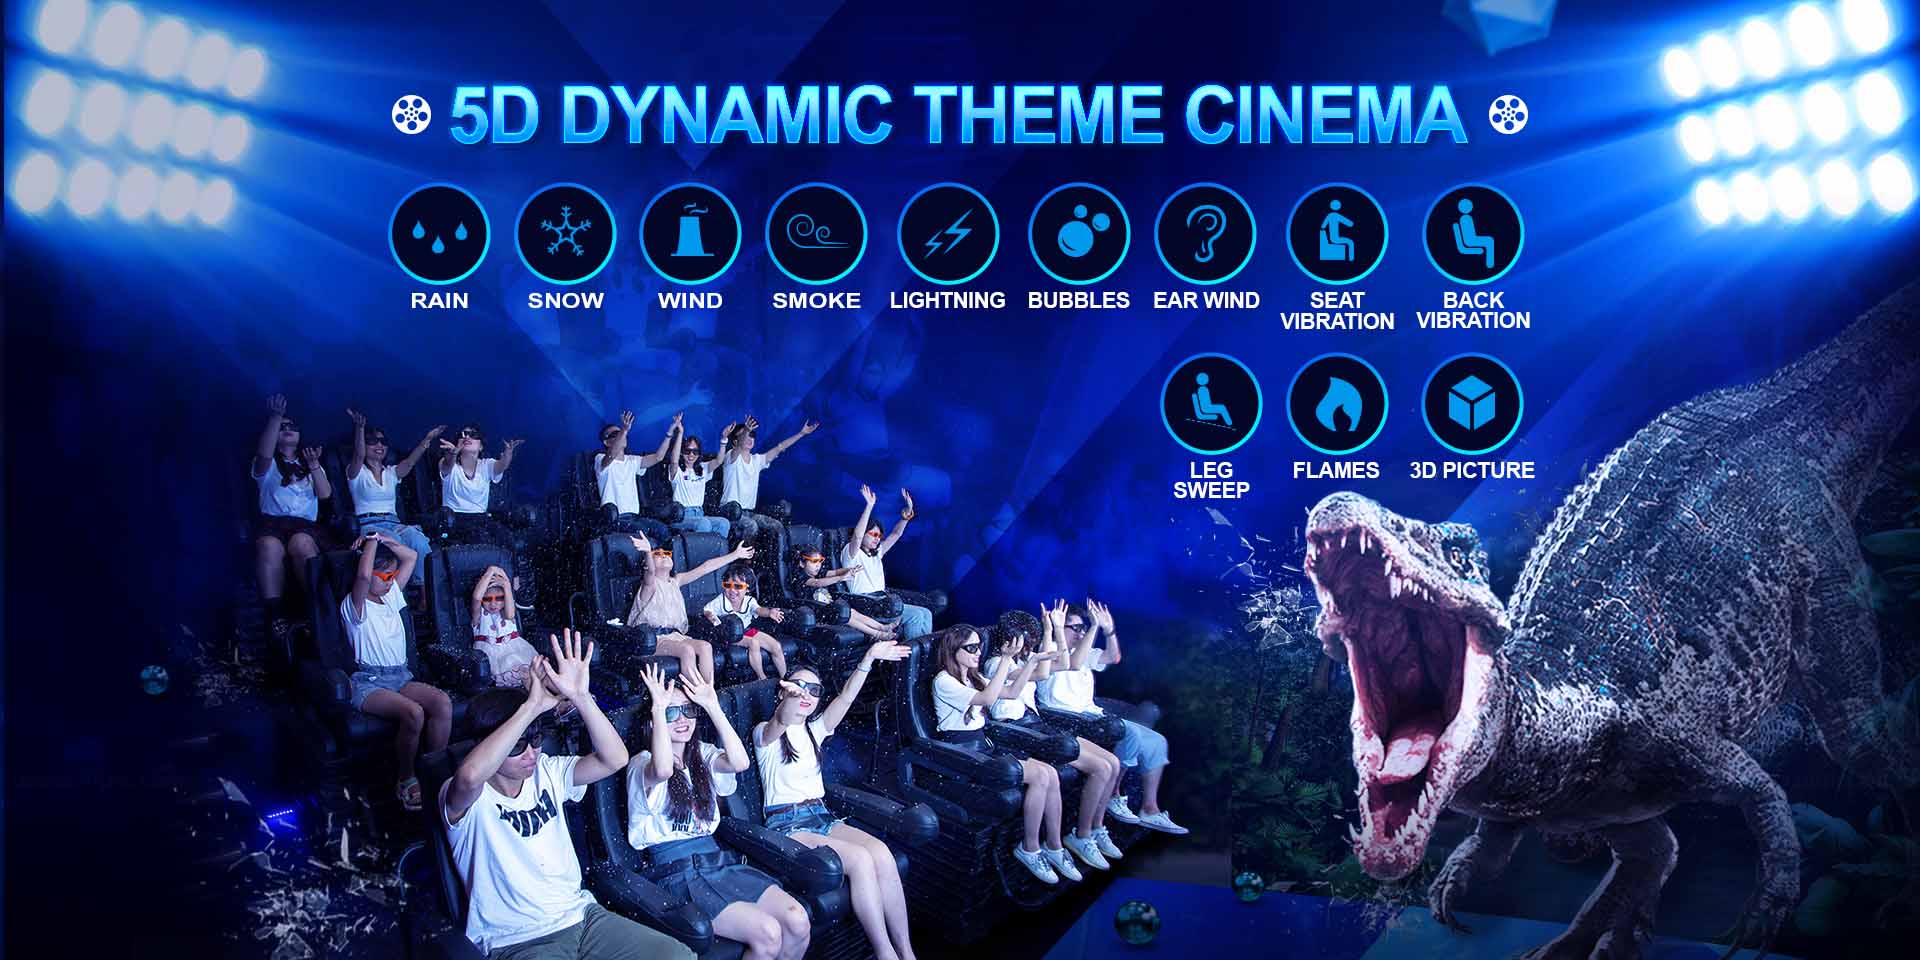 5D Dynamic Cinema Theme Park Motion Theater - 5D Cinema - 1